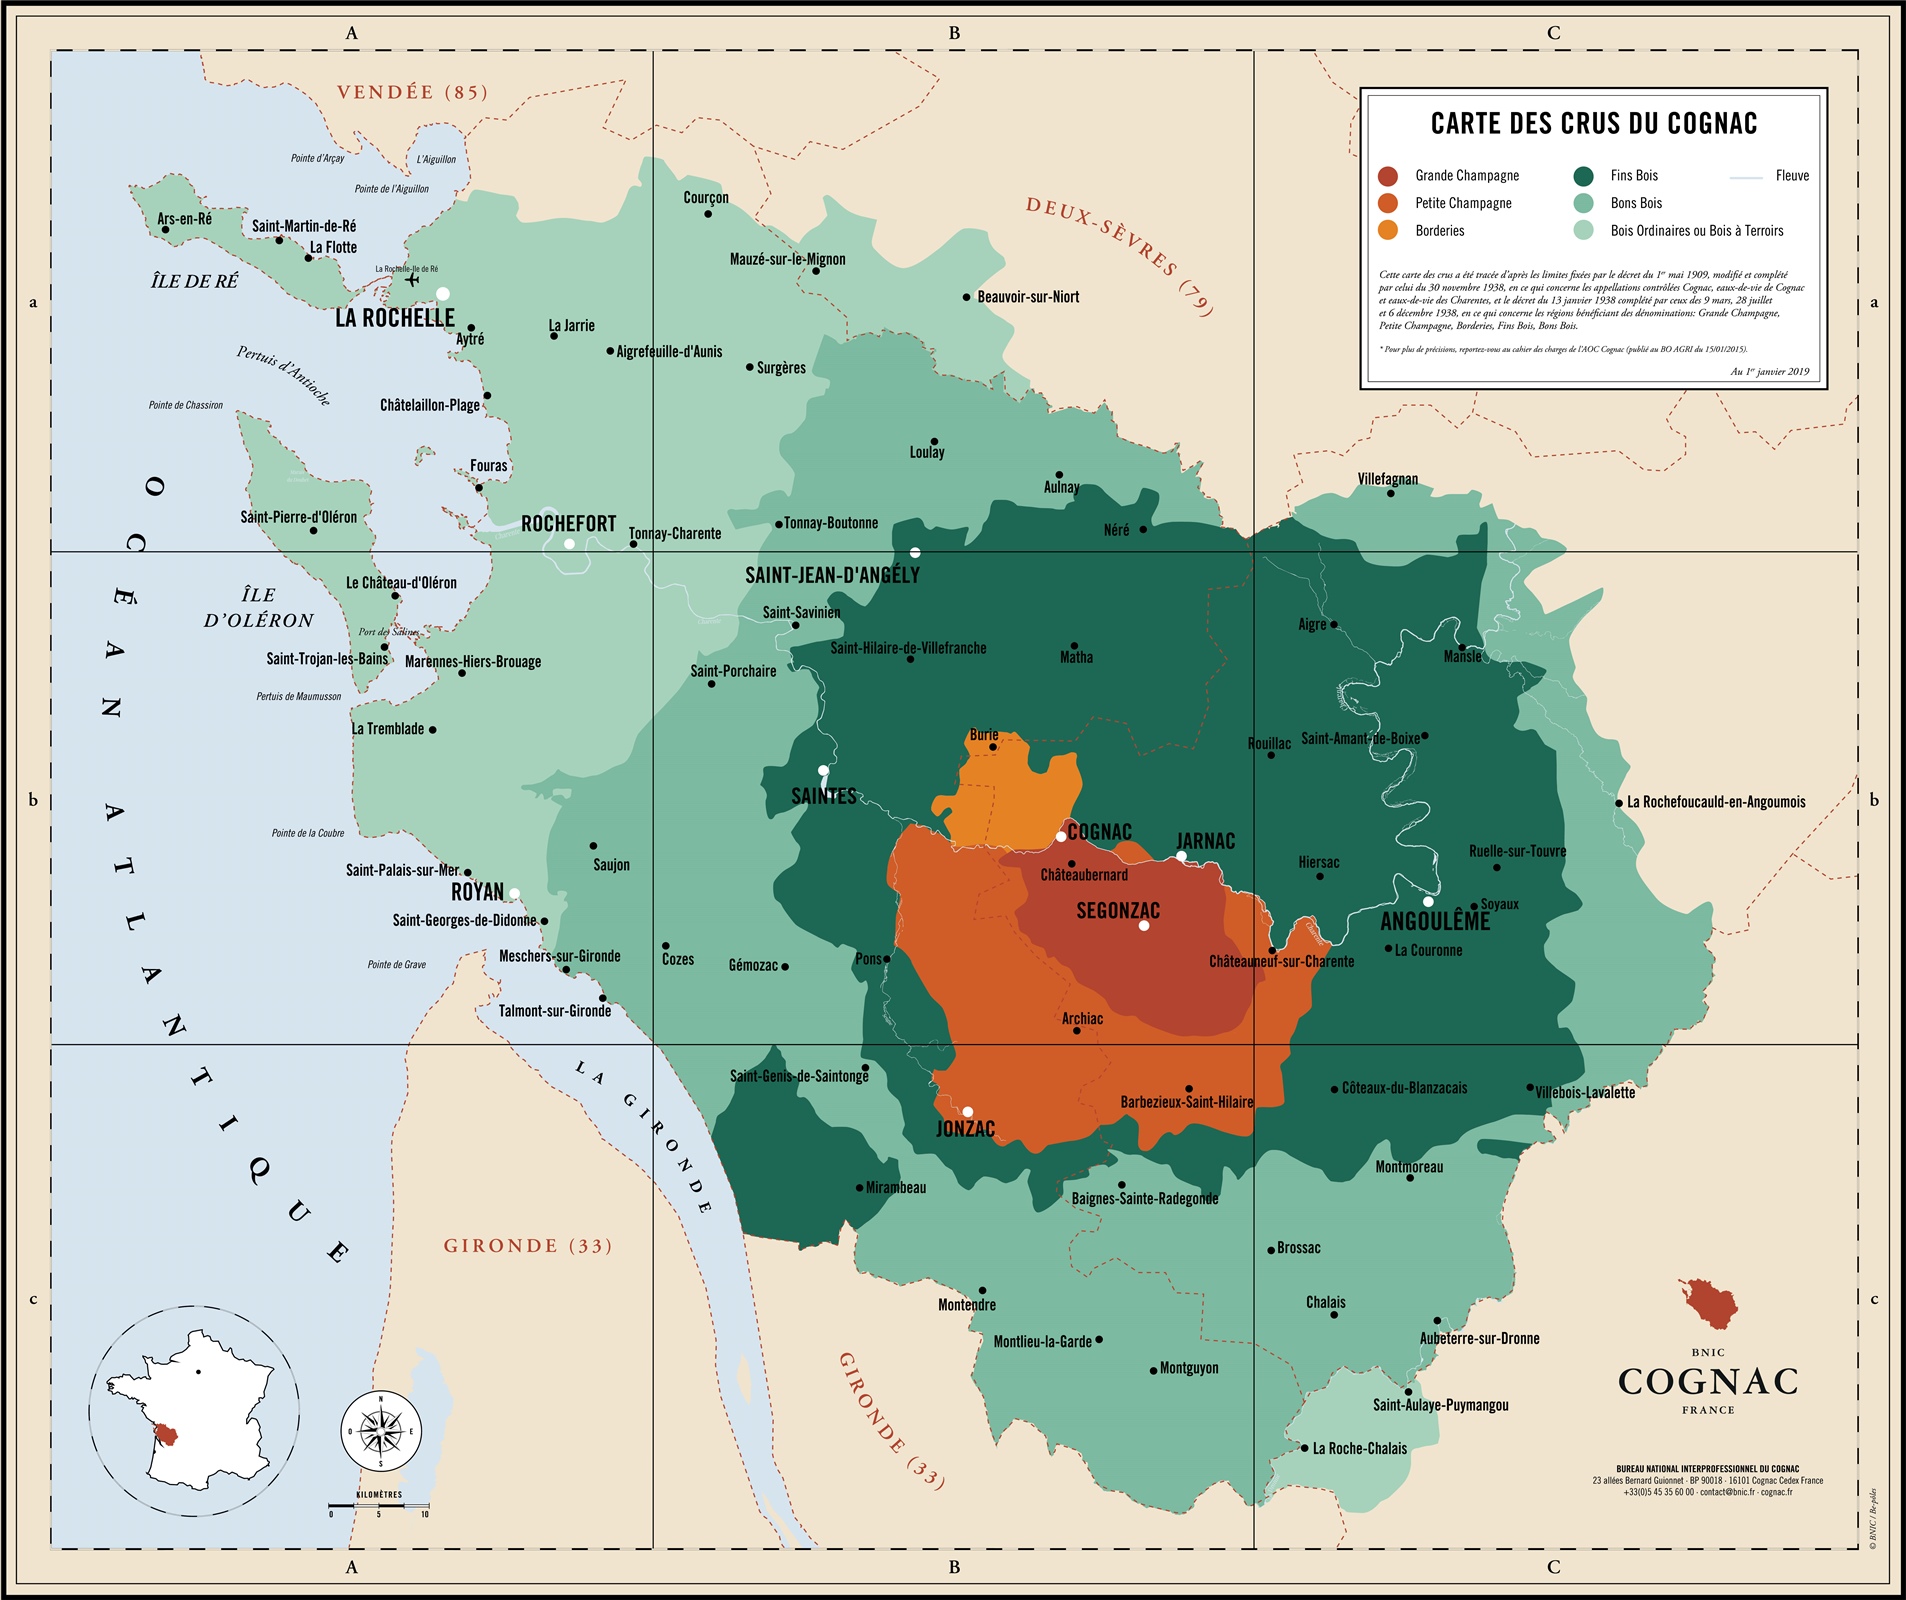 The regions of Cognac